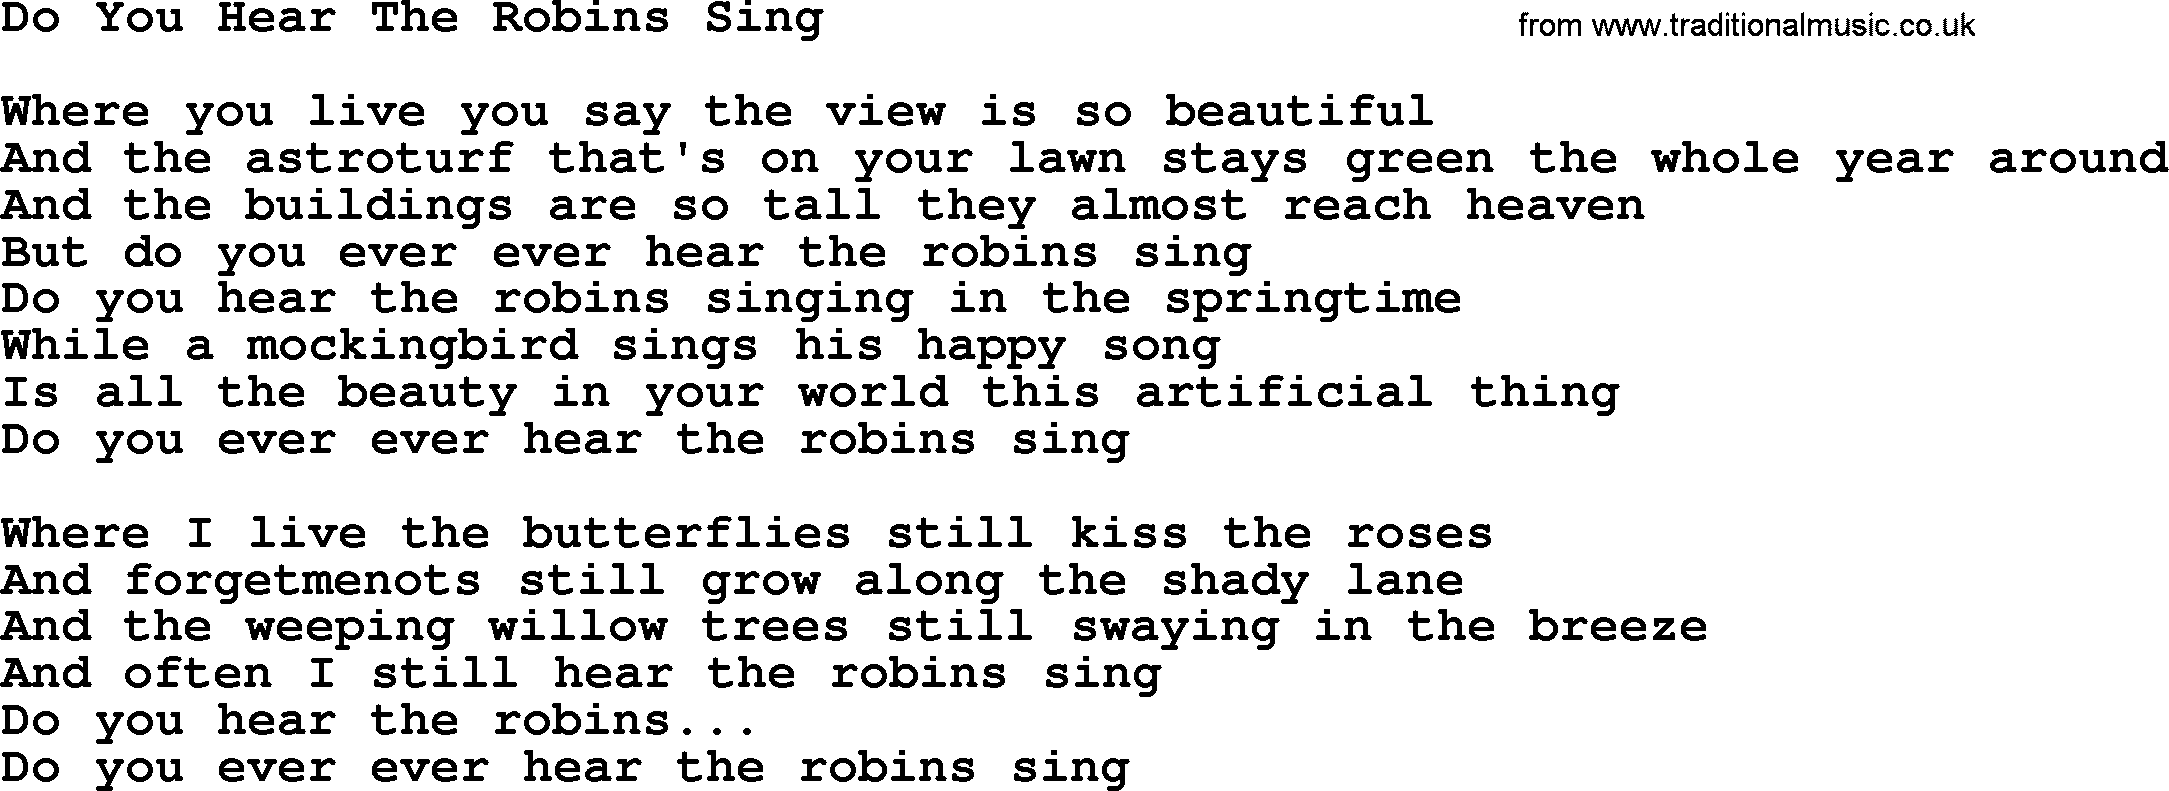 Dolly Parton song Do You Hear The Robins Sing.txt lyrics